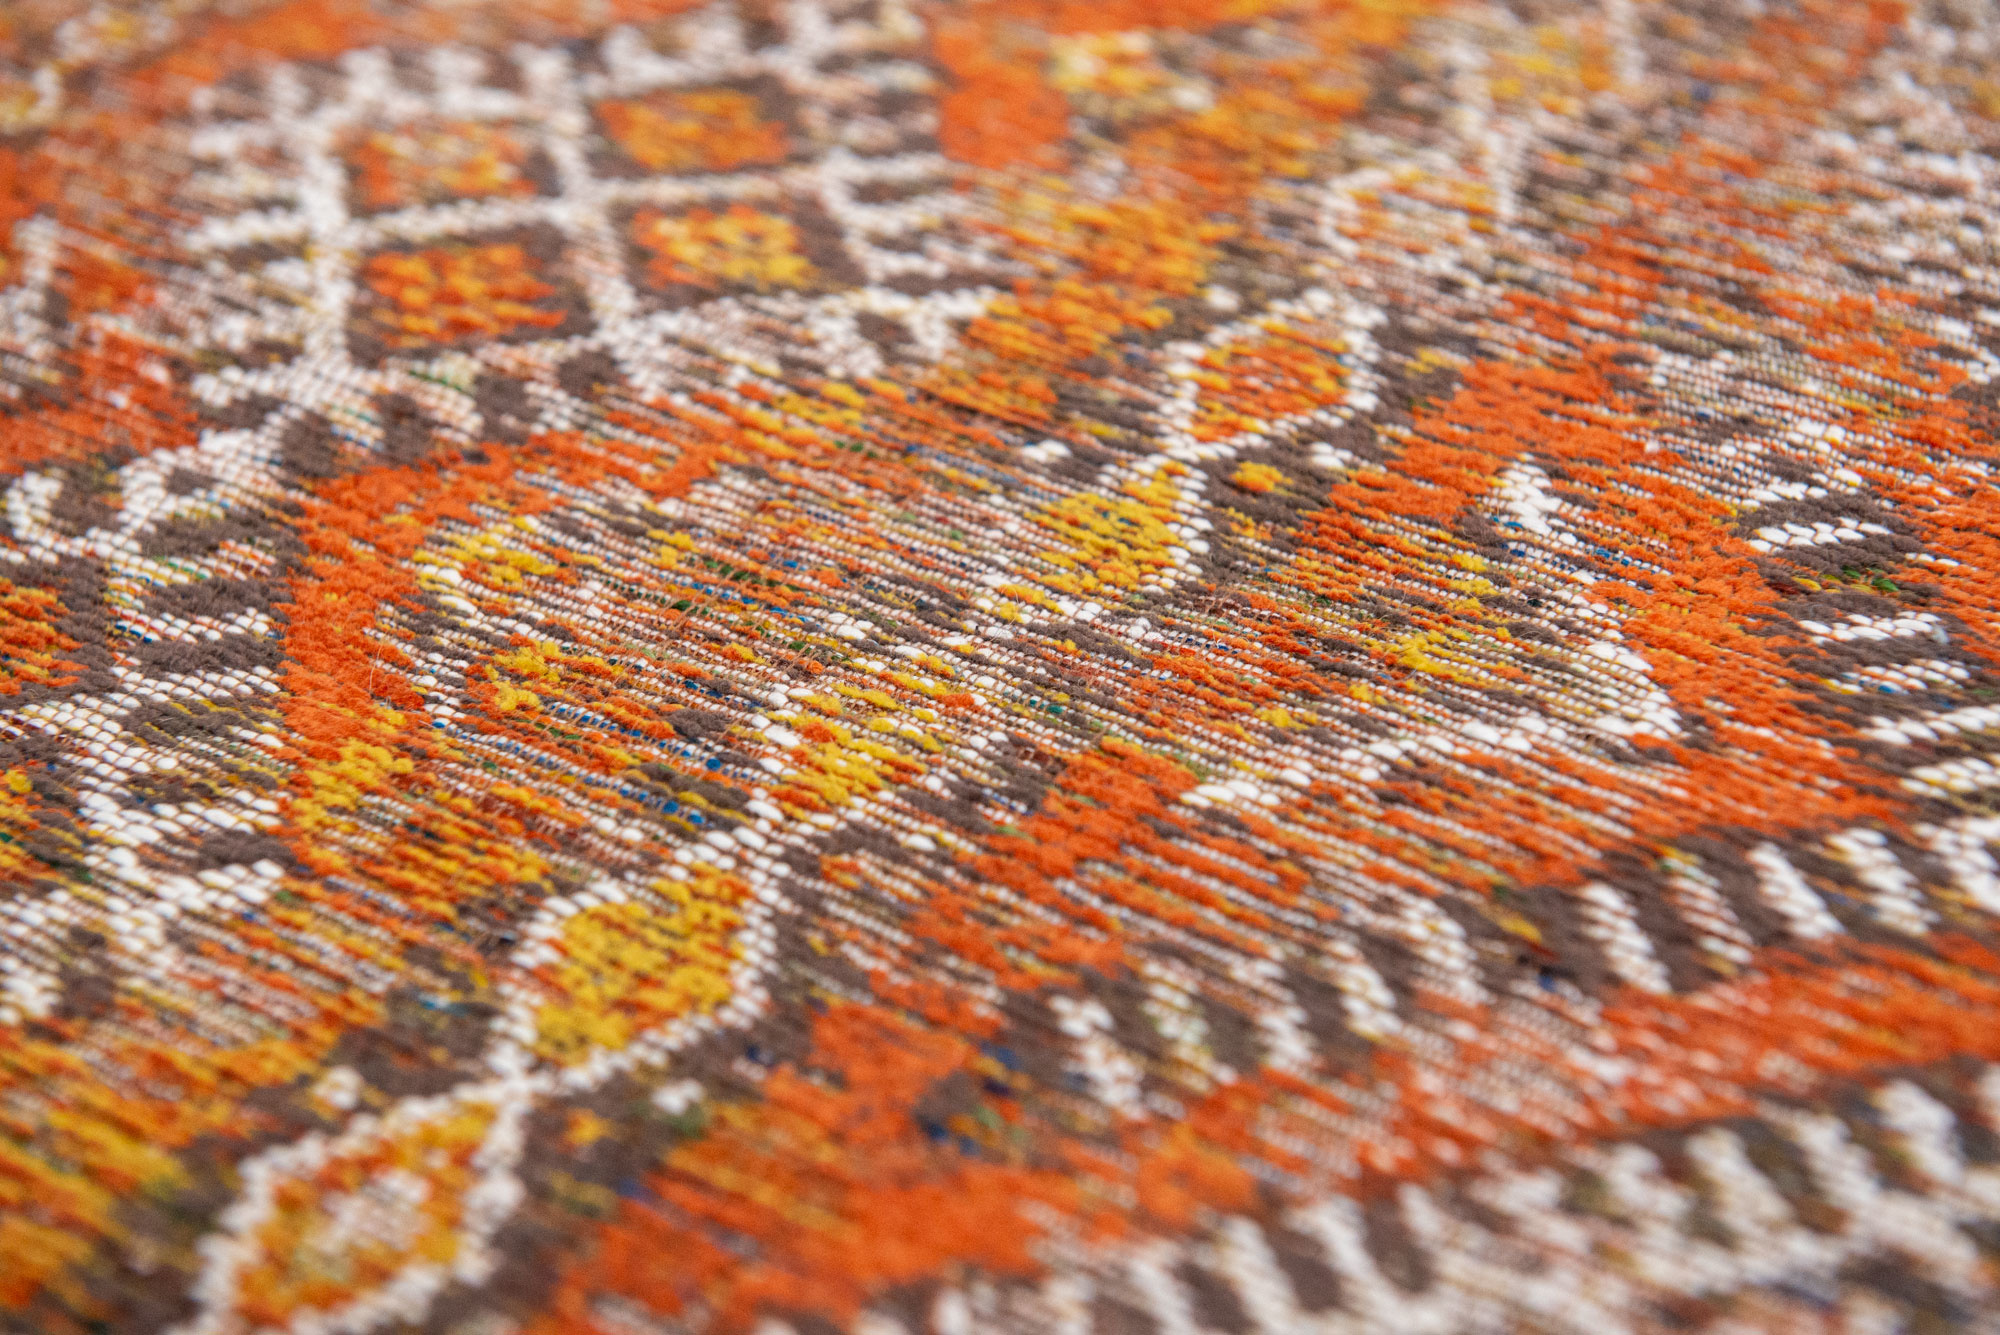 Antiquarian Flatwoven Orange Rug ☞ Size: 5' 7" x 8' (170 x 240 cm)